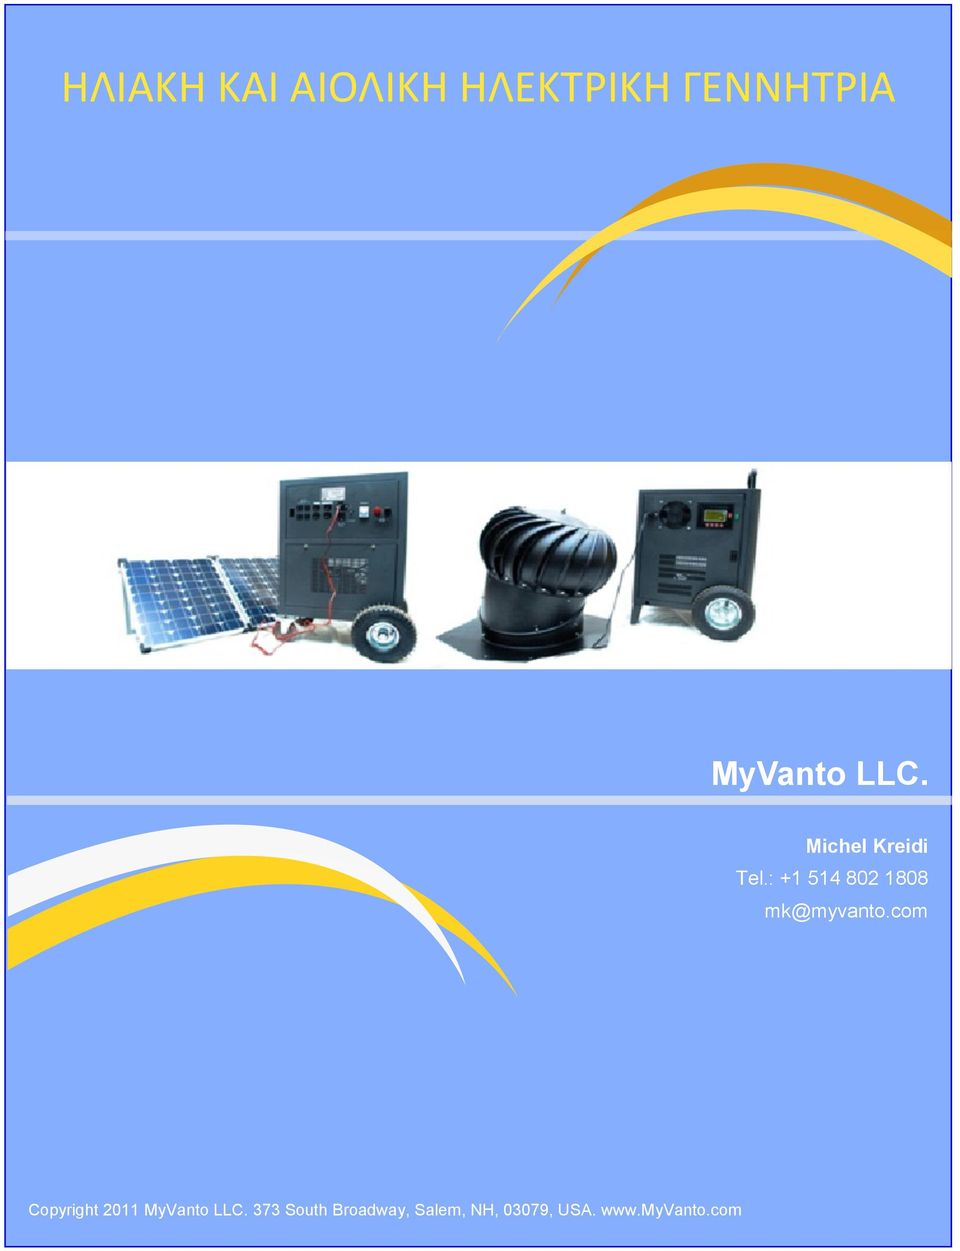 MyVanto LLC.